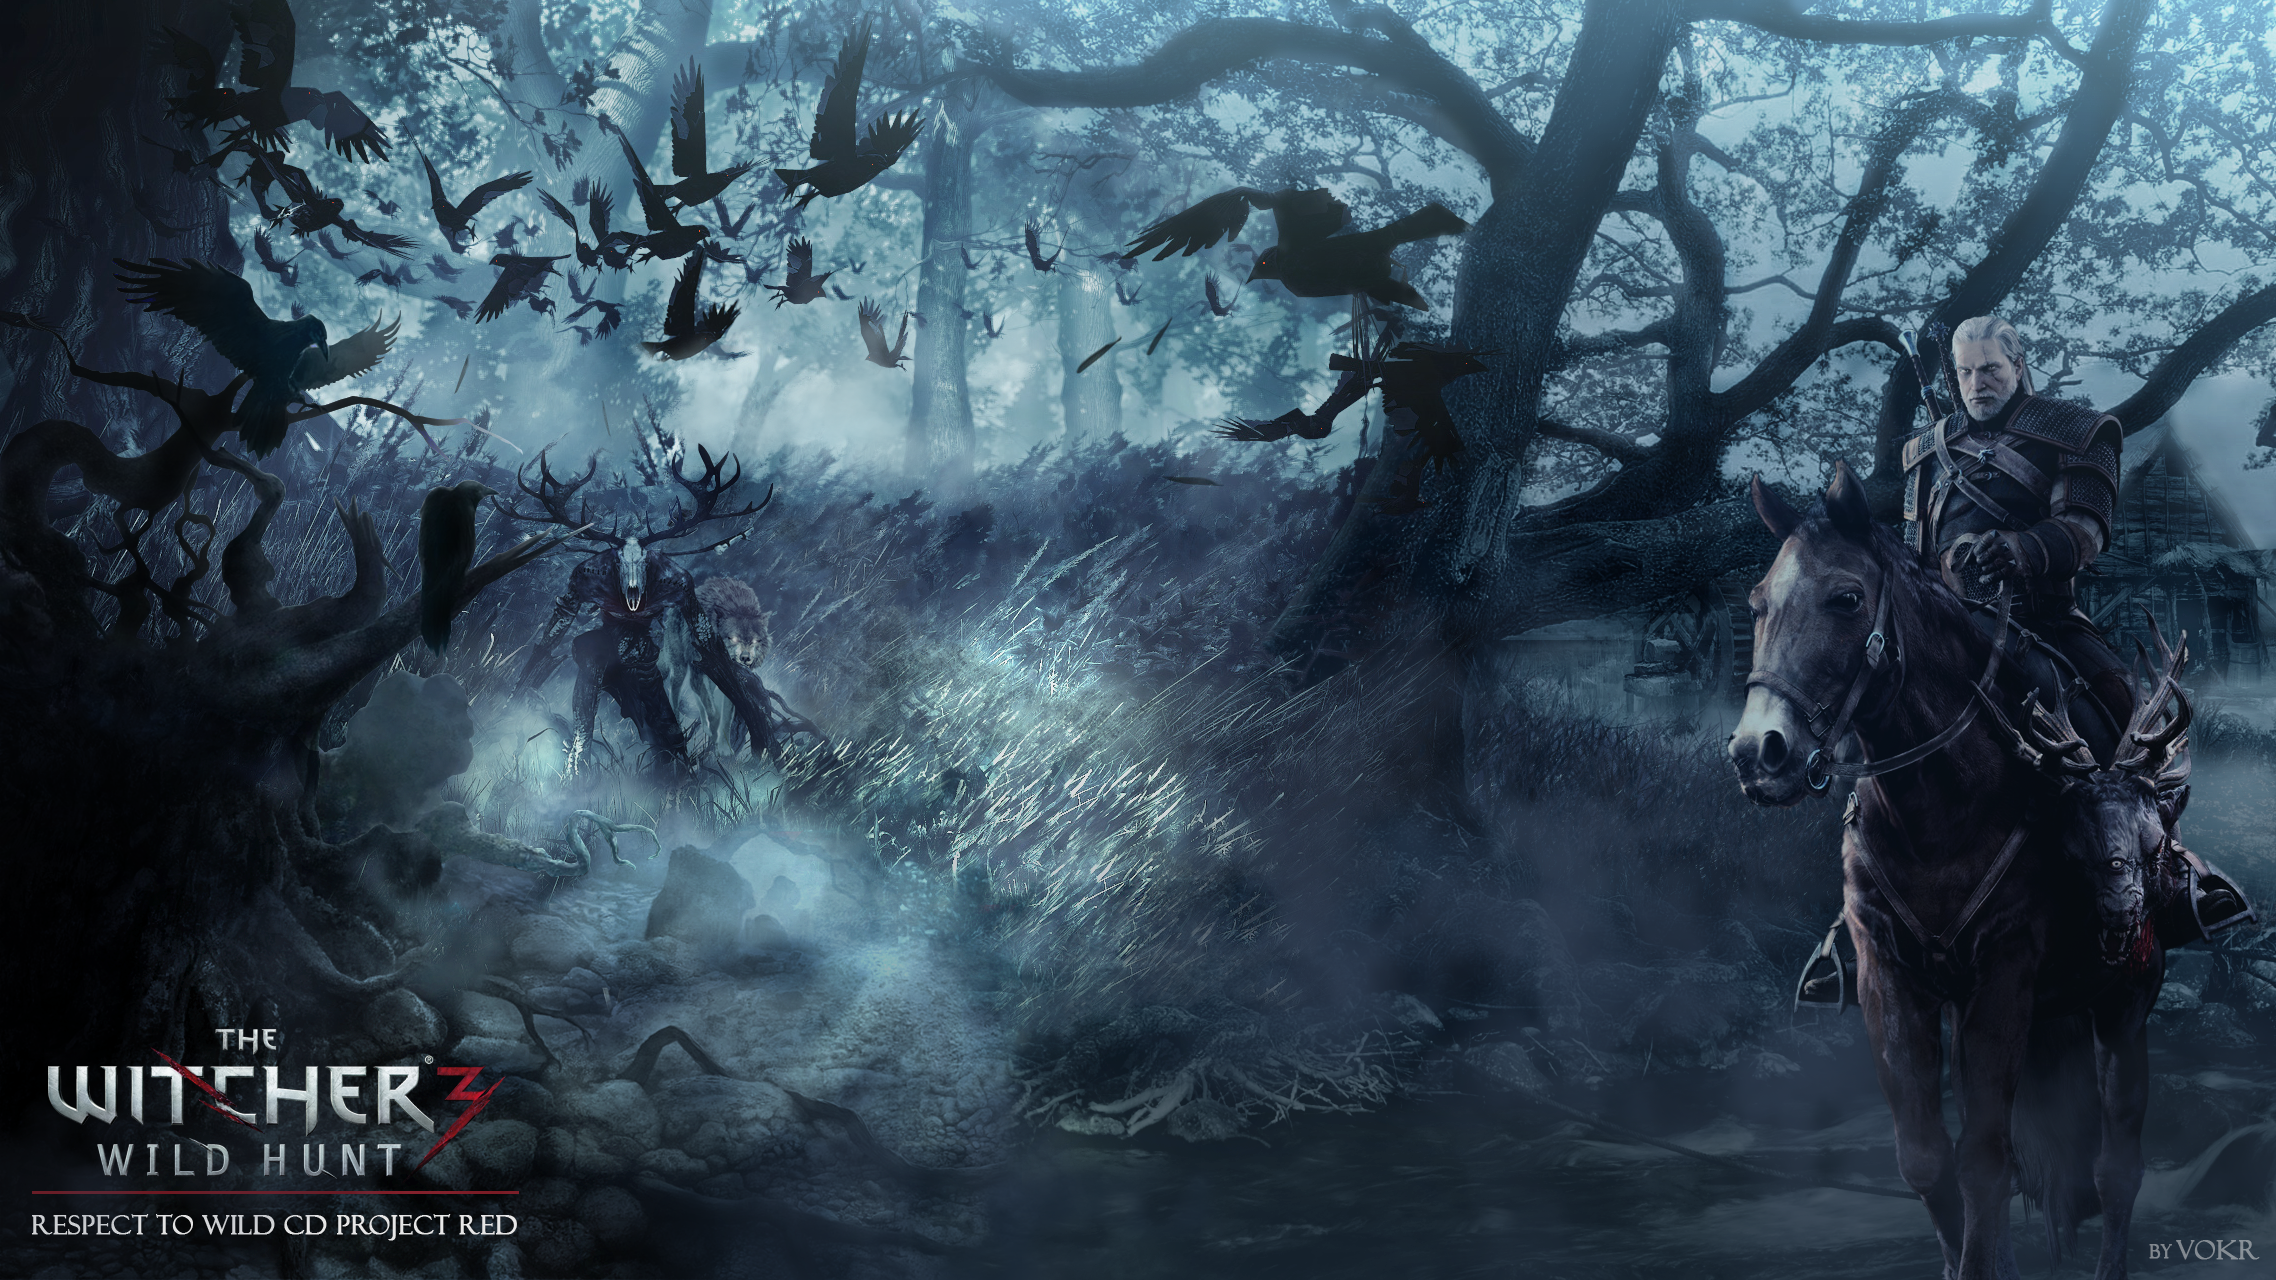 The Witcher 3: Wild Hunt Wallpaper by Vokr on DeviantArt